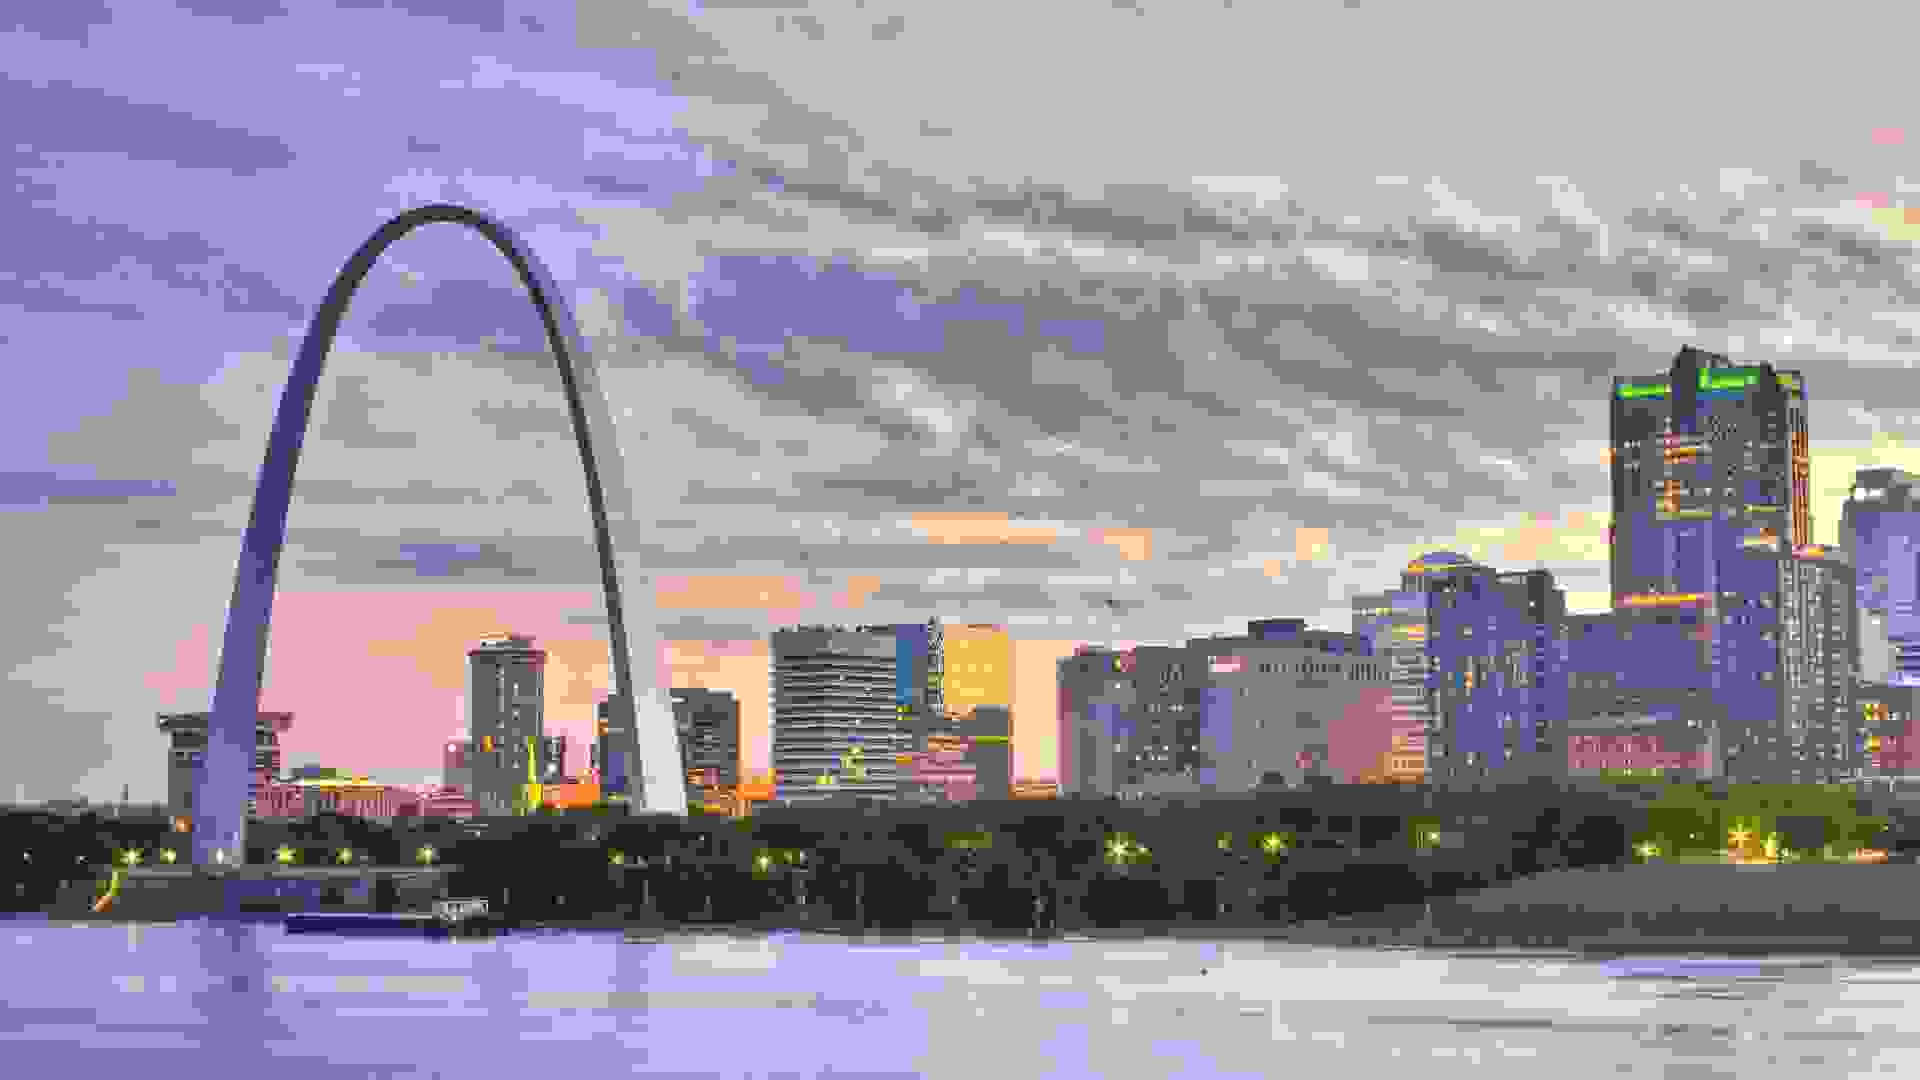 St. Louis Missouri skyline